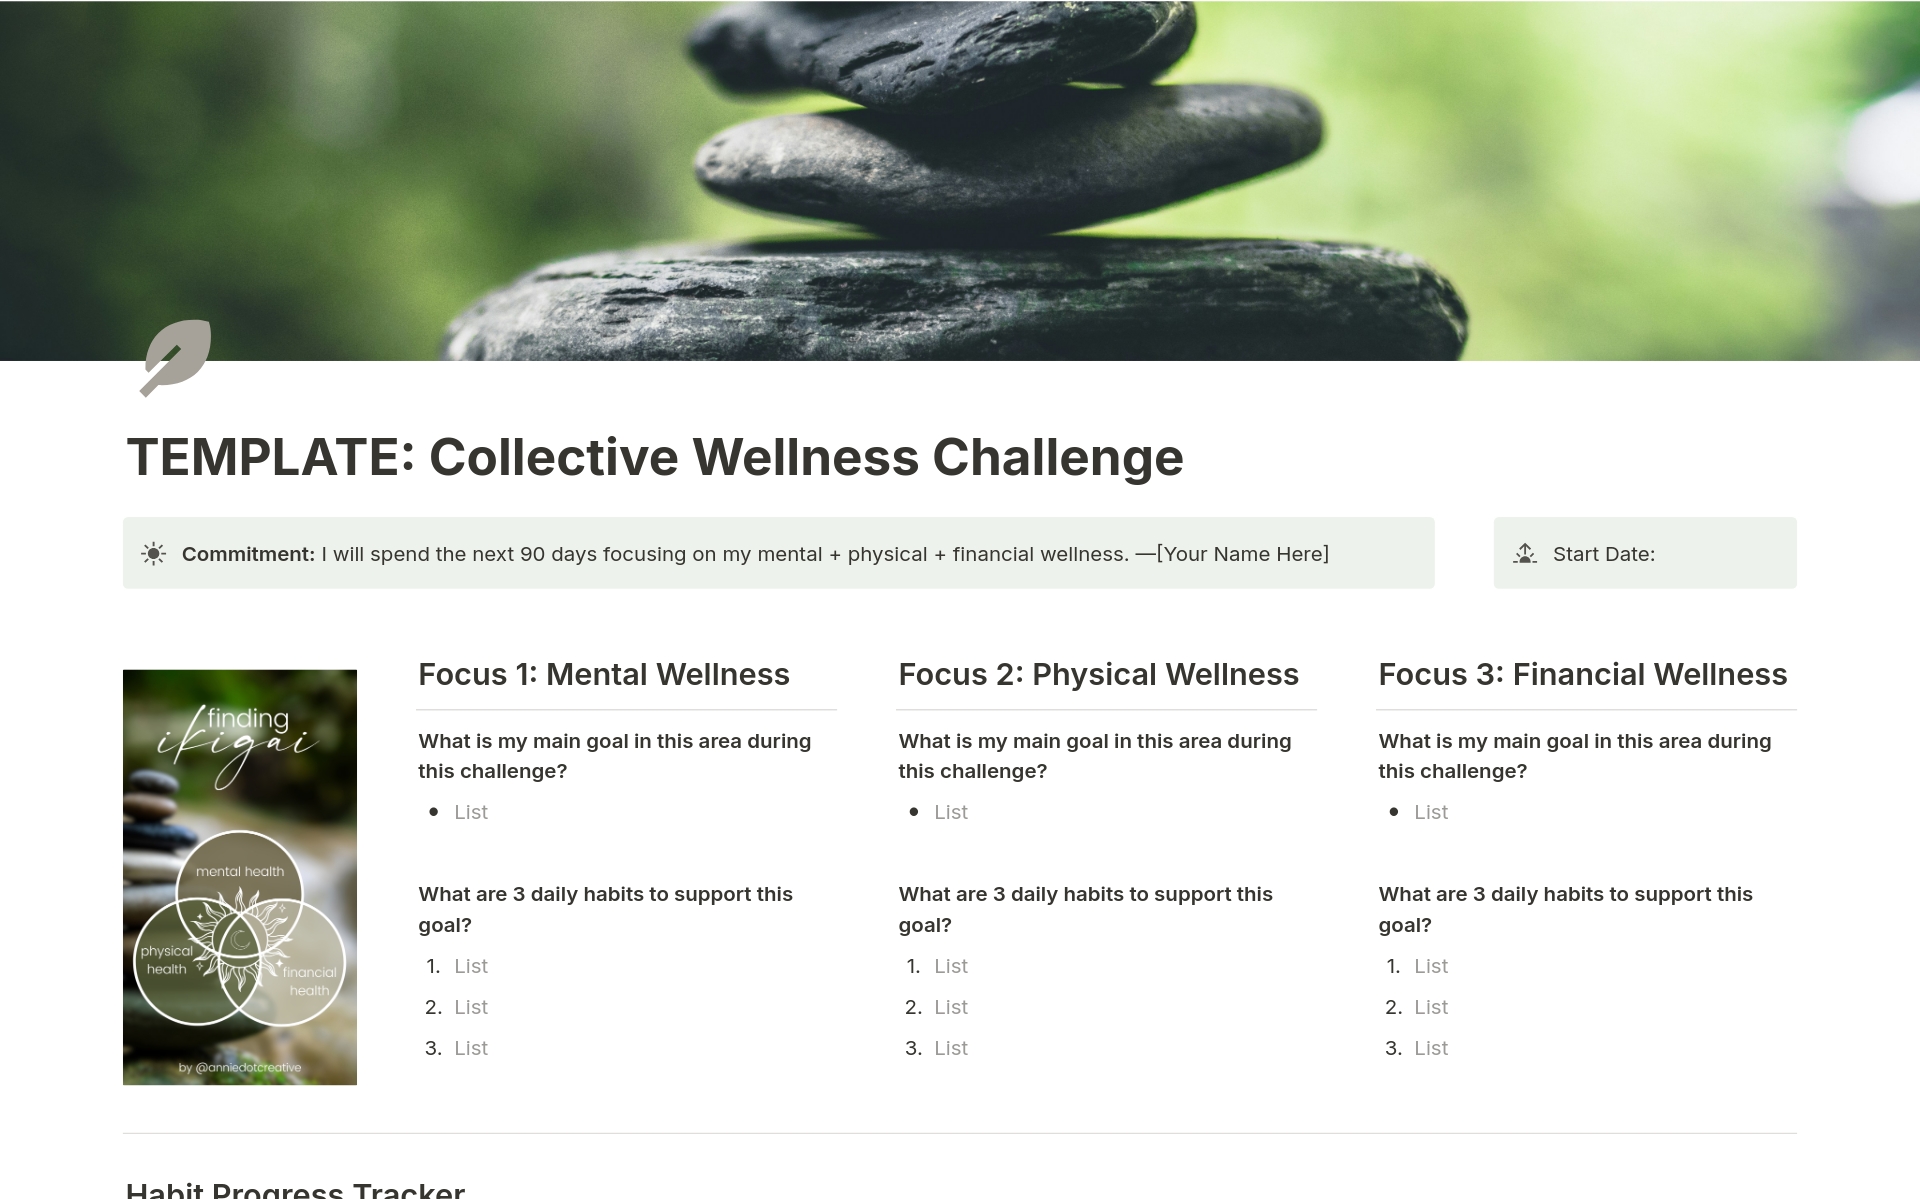 Vista previa de plantilla para Collective Wellness Challenge